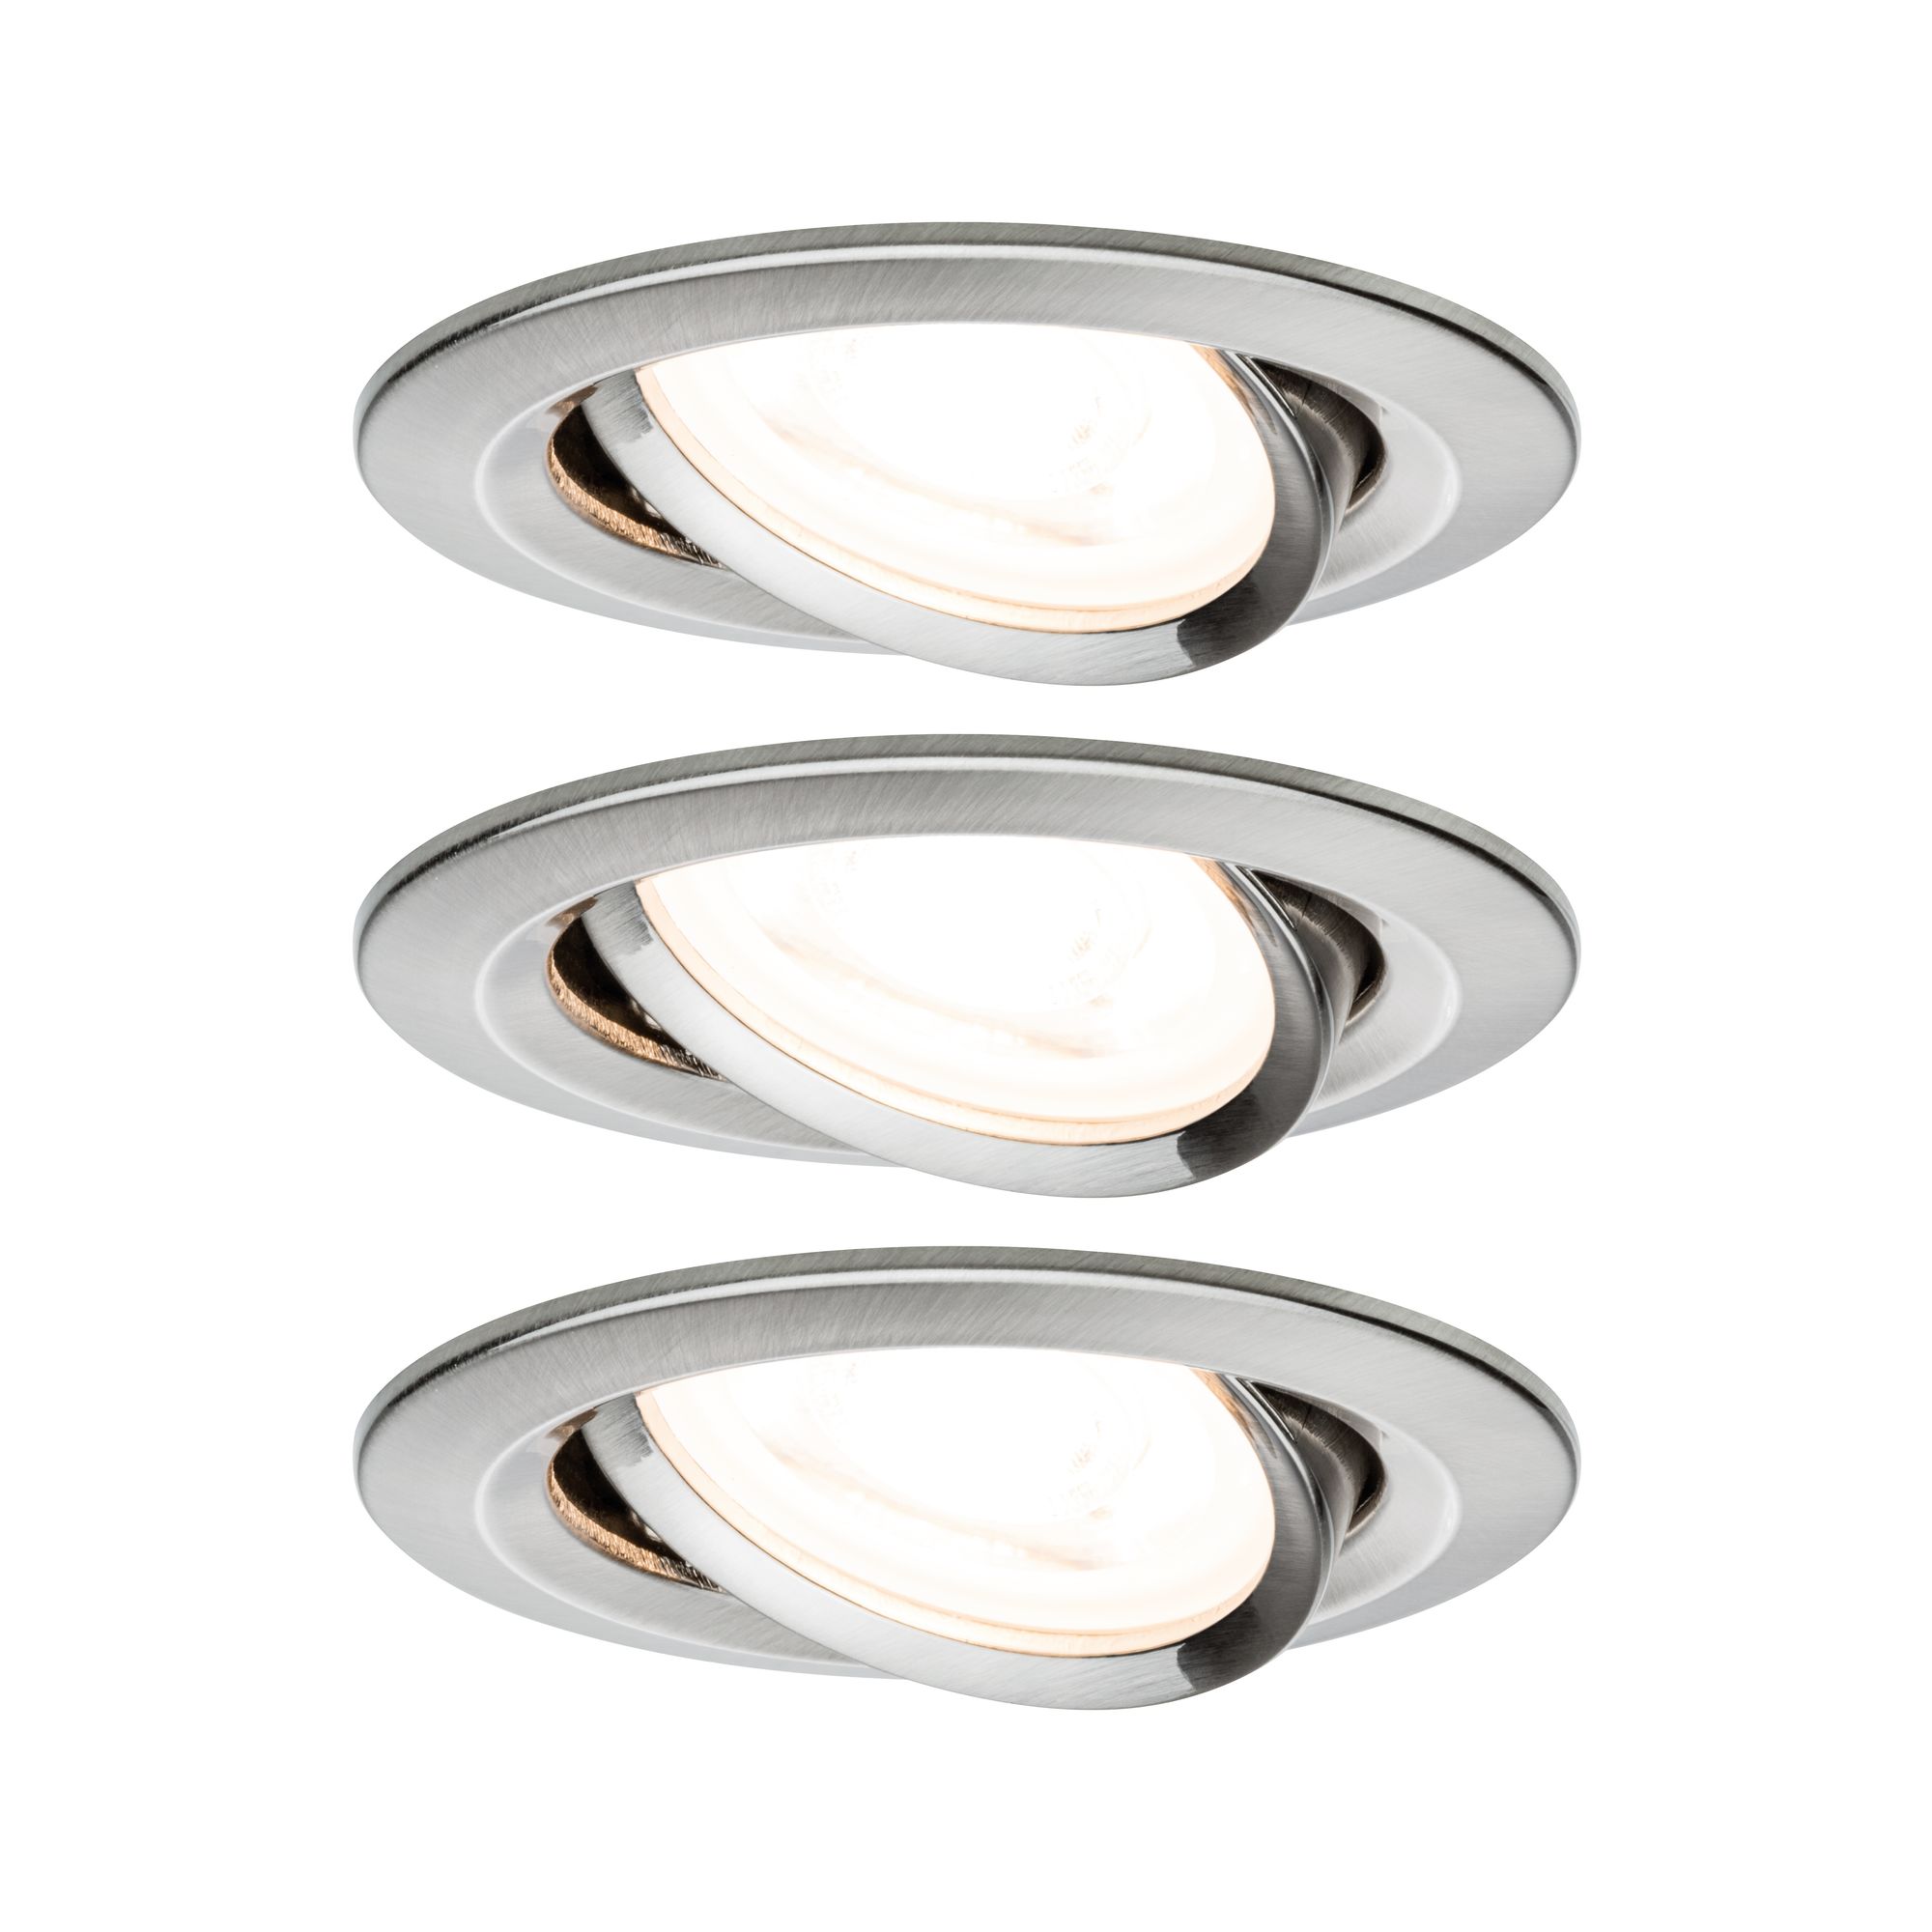 PAULMANN - Vestavné svítidlo LED Nova kruhové 3x6,5W GU10 kov 3-krokové-stmívatelné, P 93465